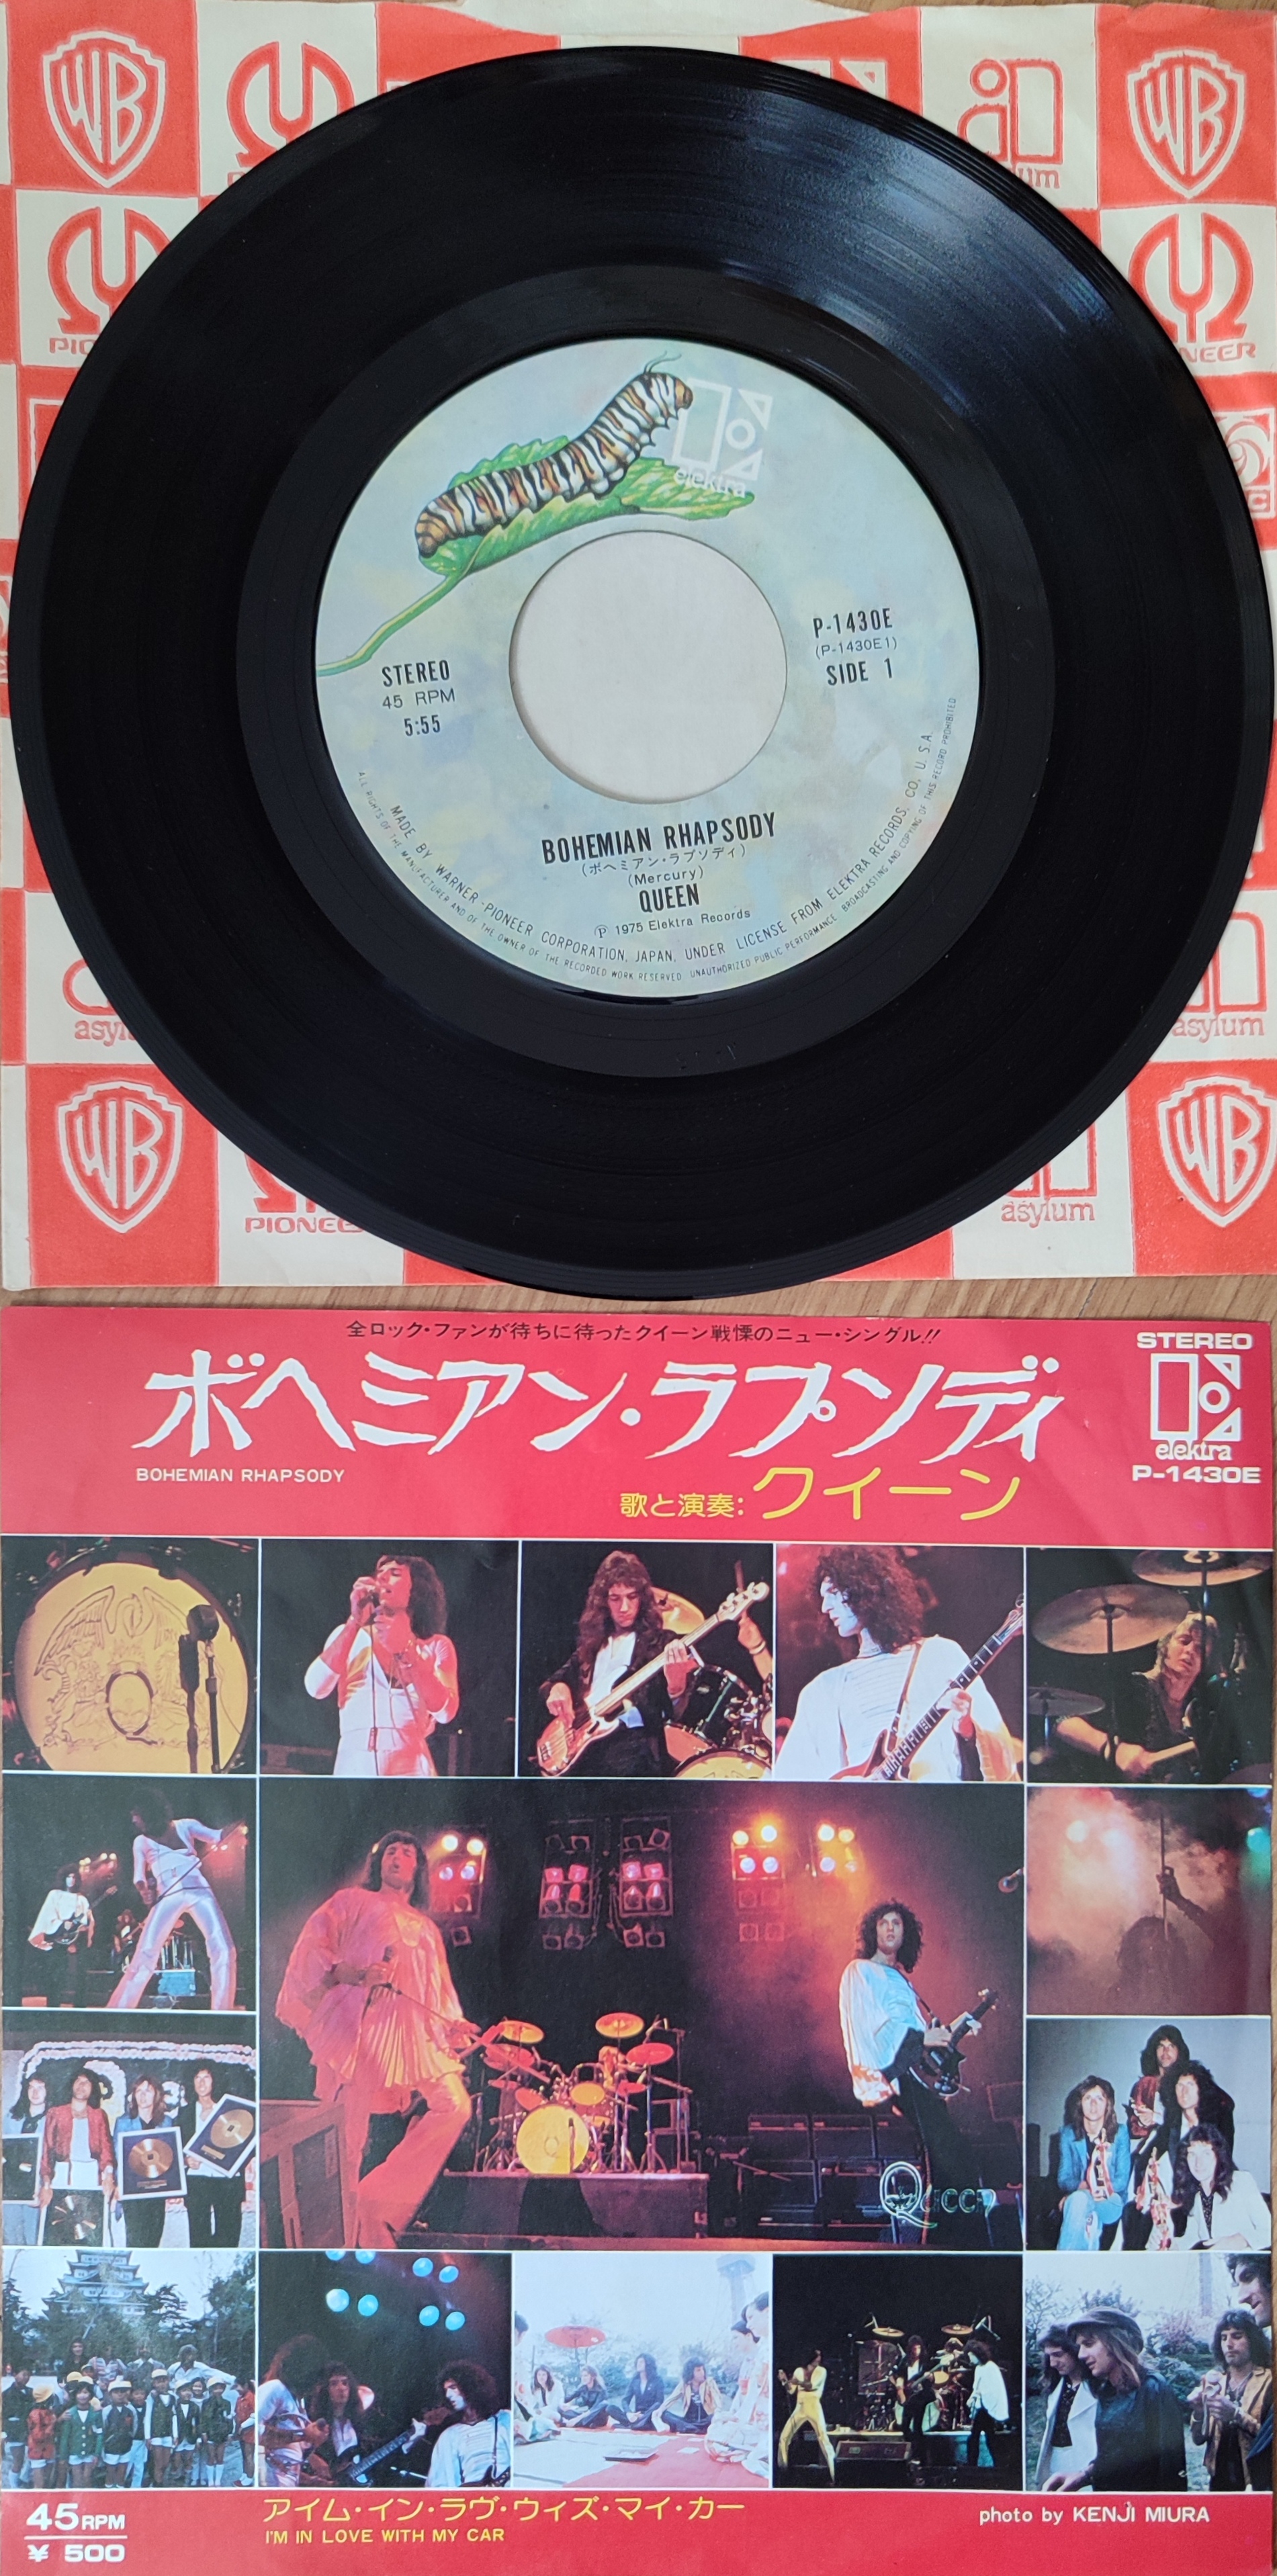 QUEEN - Bohemian Rhapsody 1975 Japonya Basım 45lik Plak Temiz 2. el